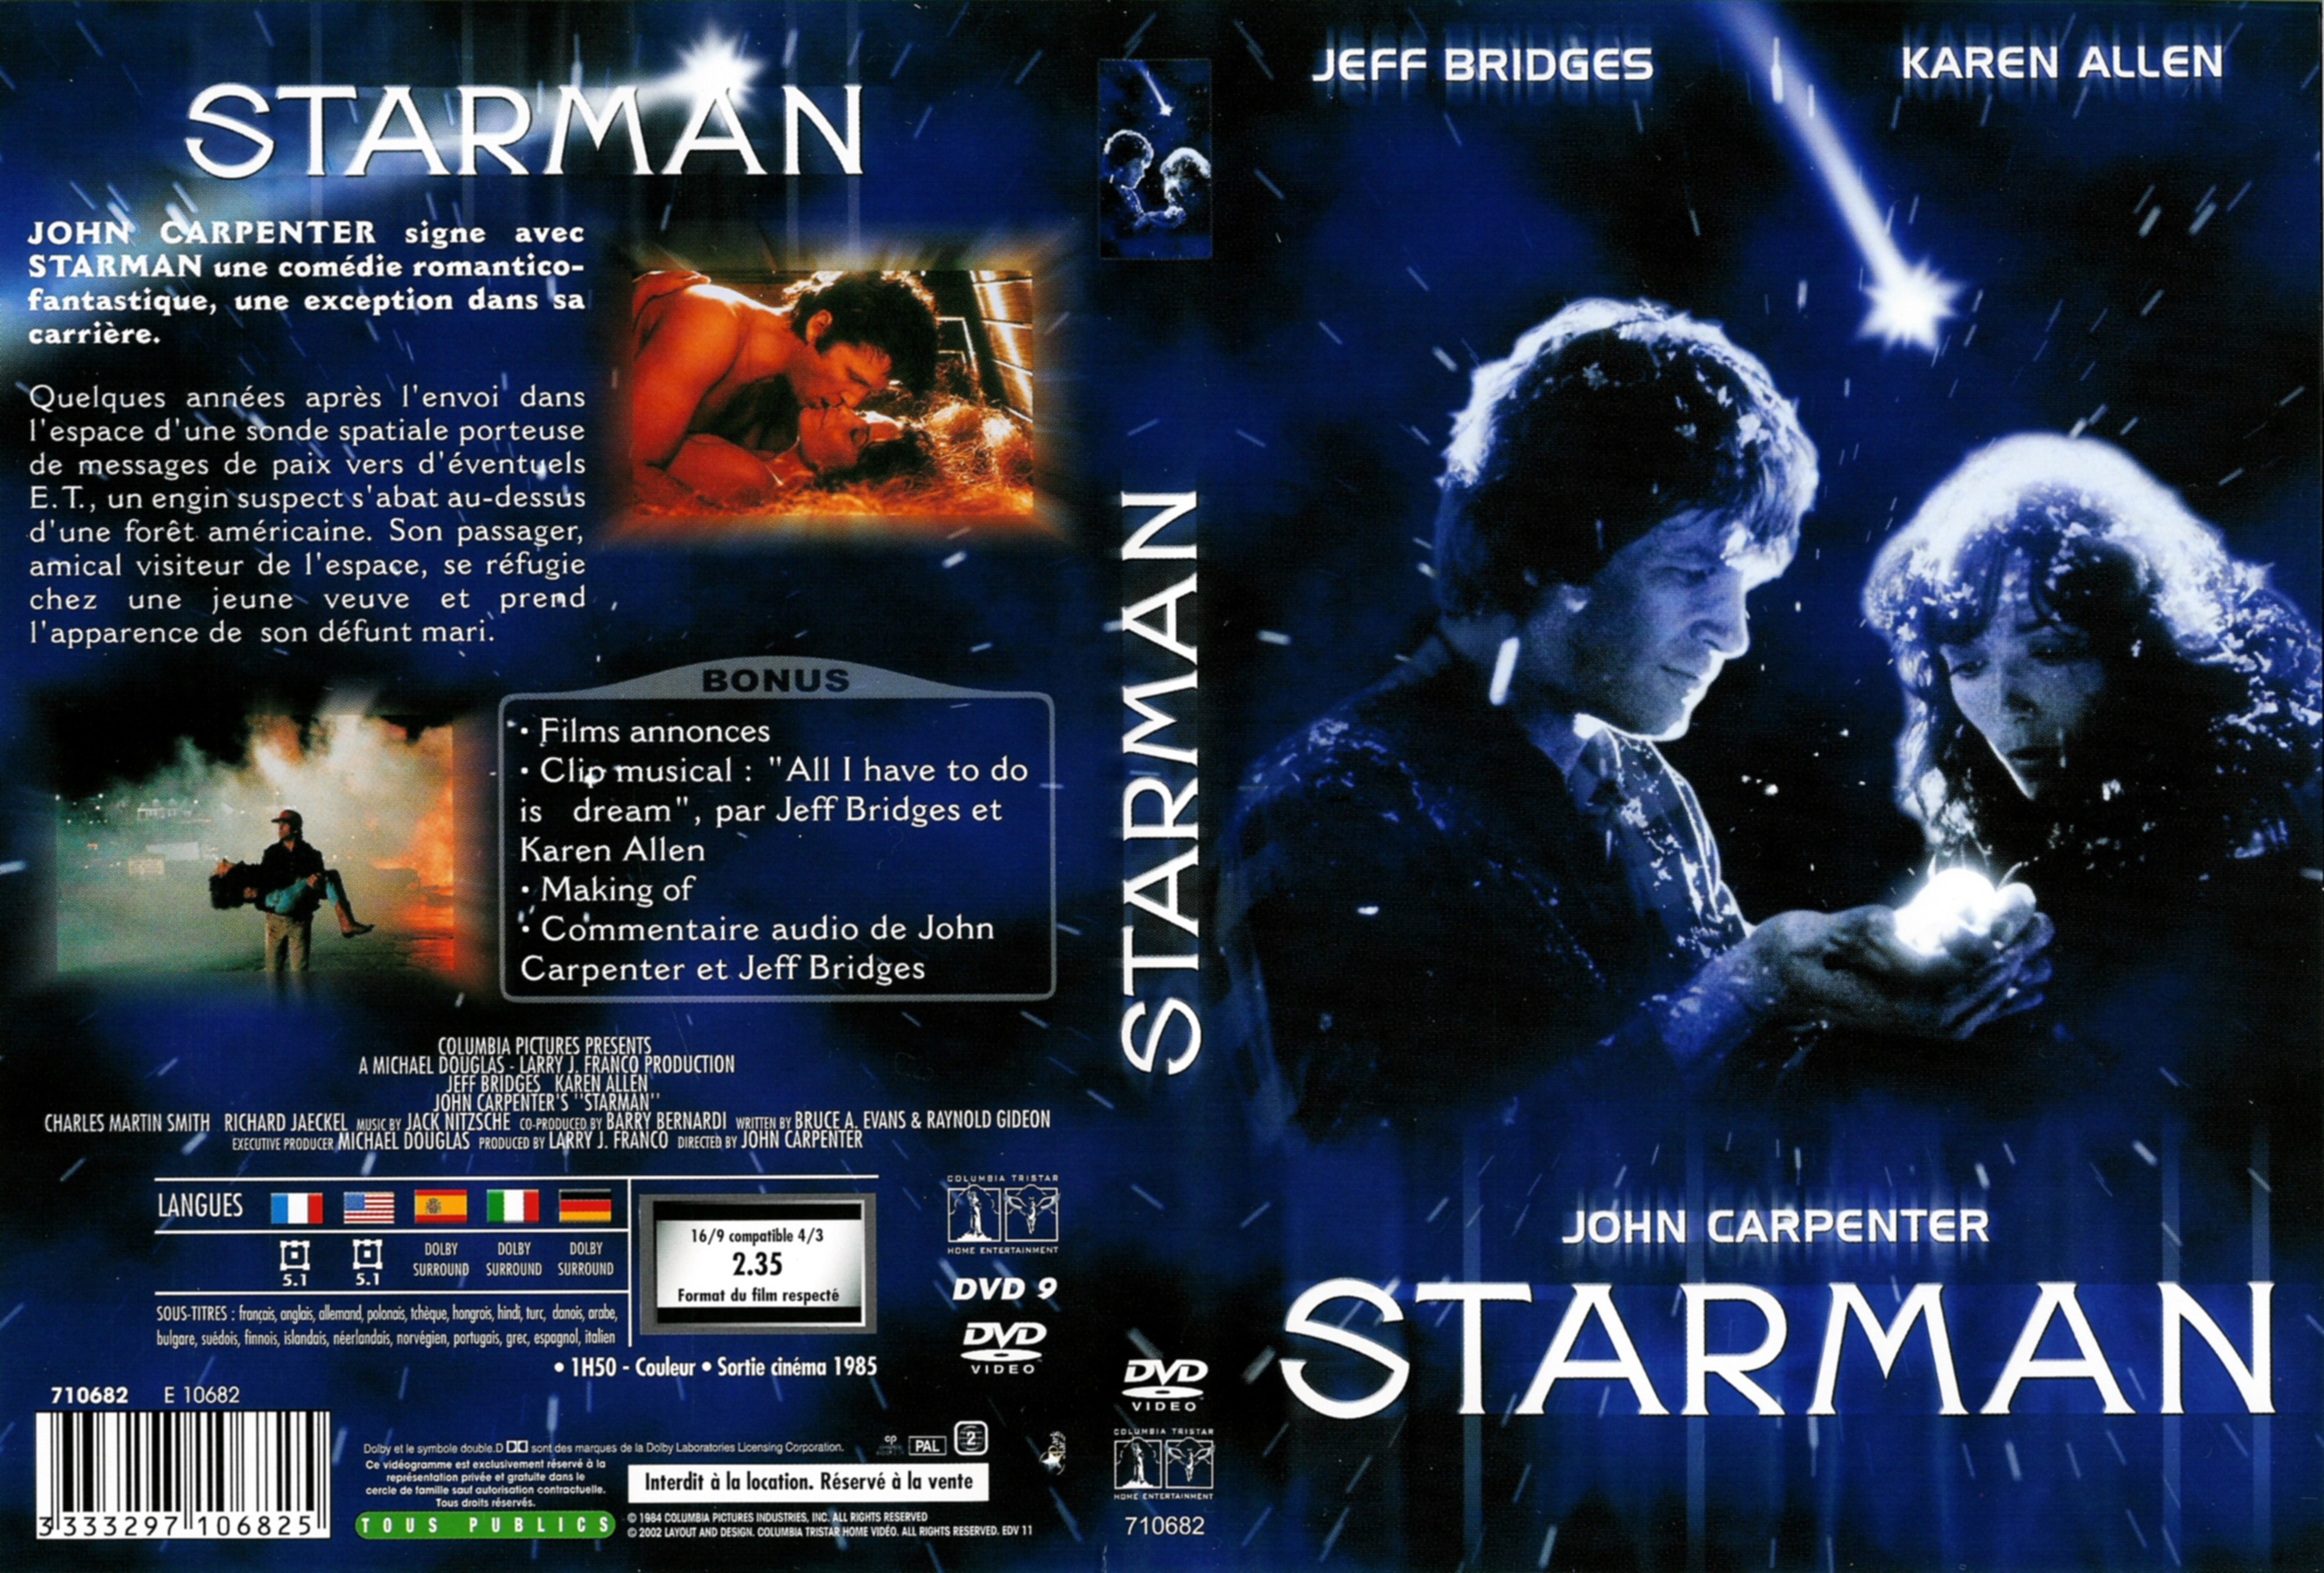 Jaquette DVD Starman